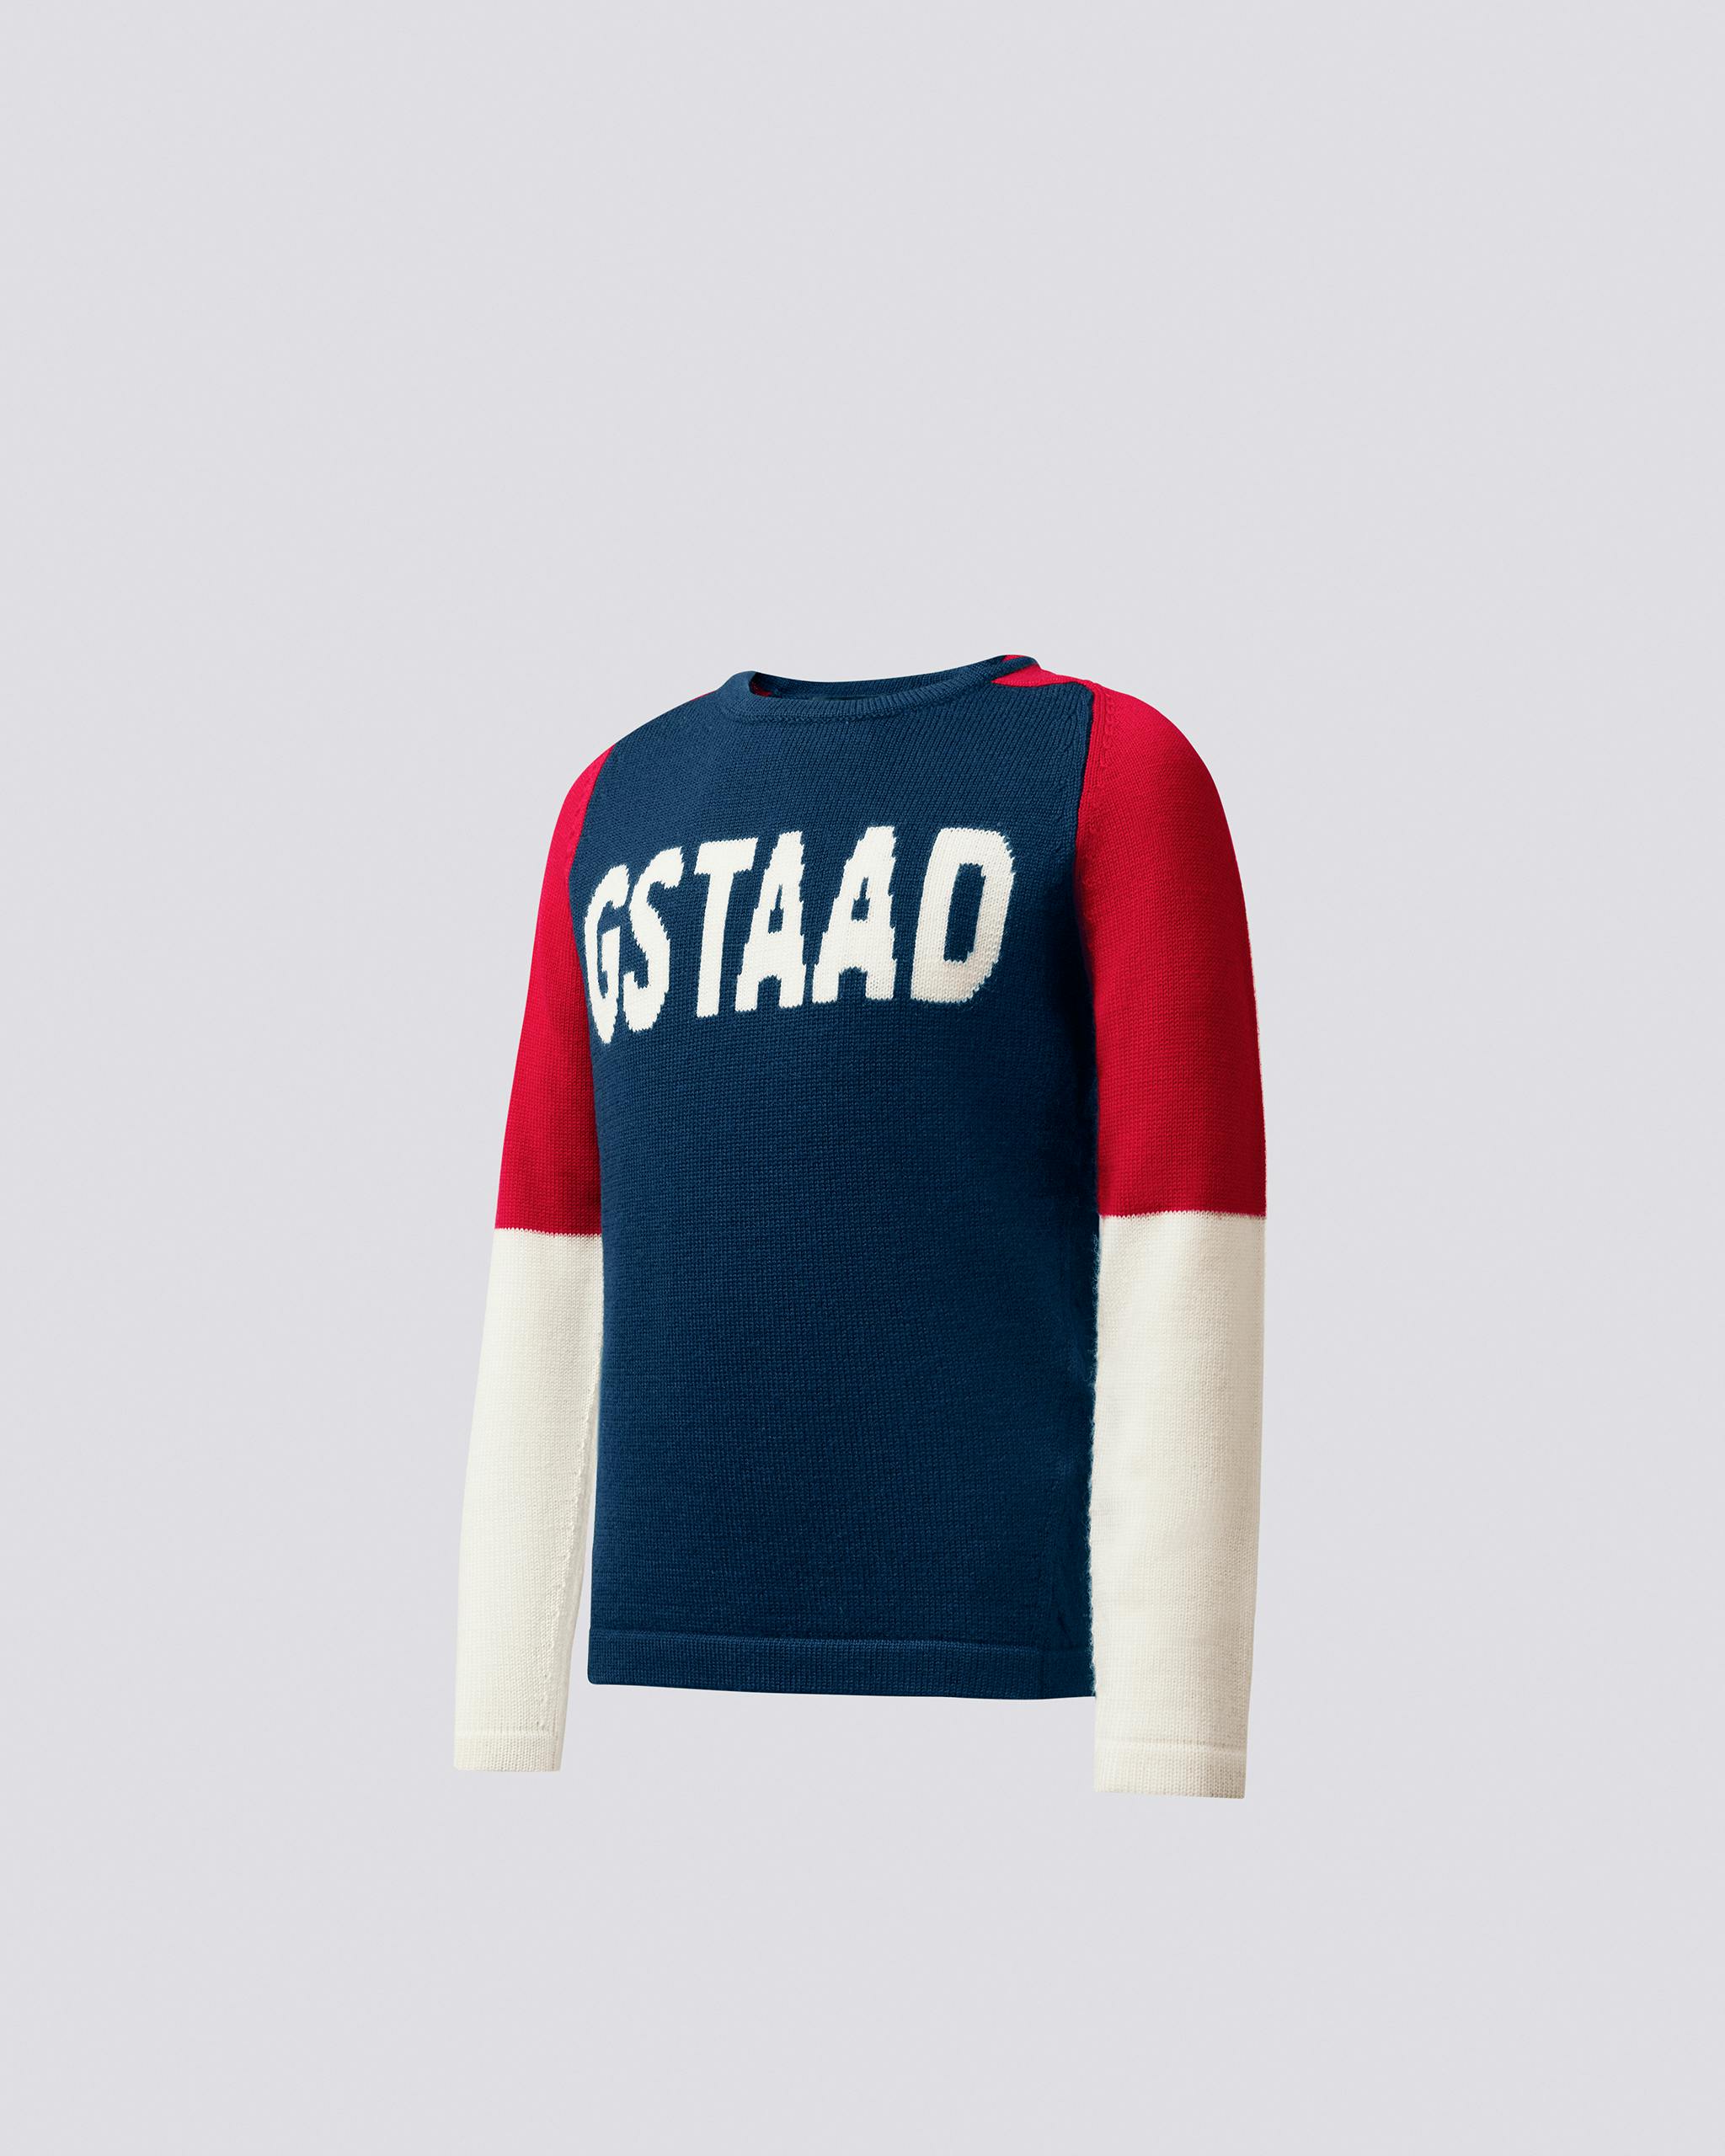 Gstaad Merino Wool Sweater 0